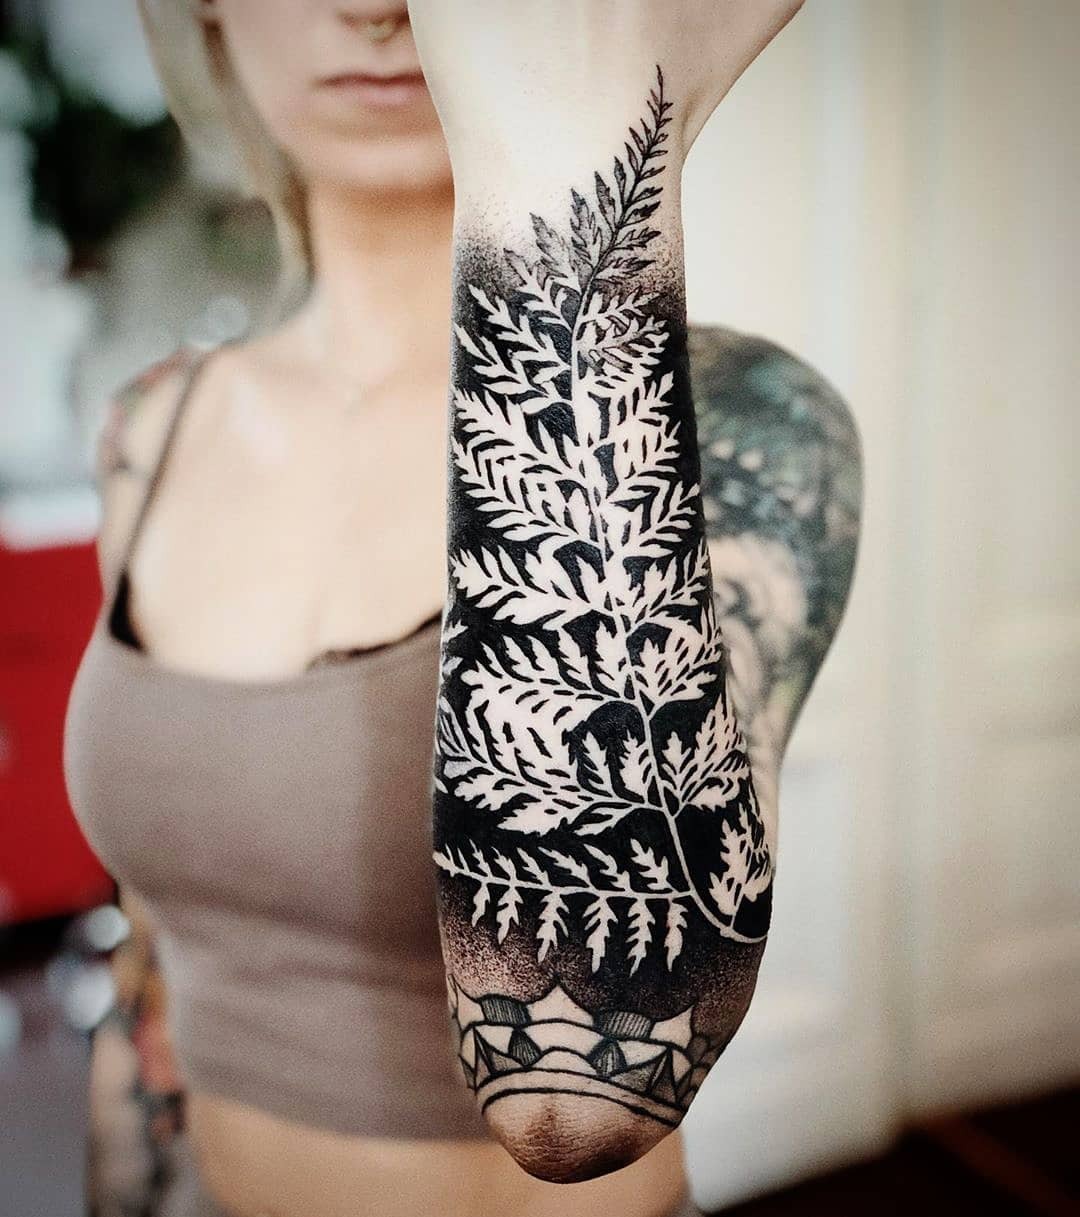 L’art du tatouage de dzo lama